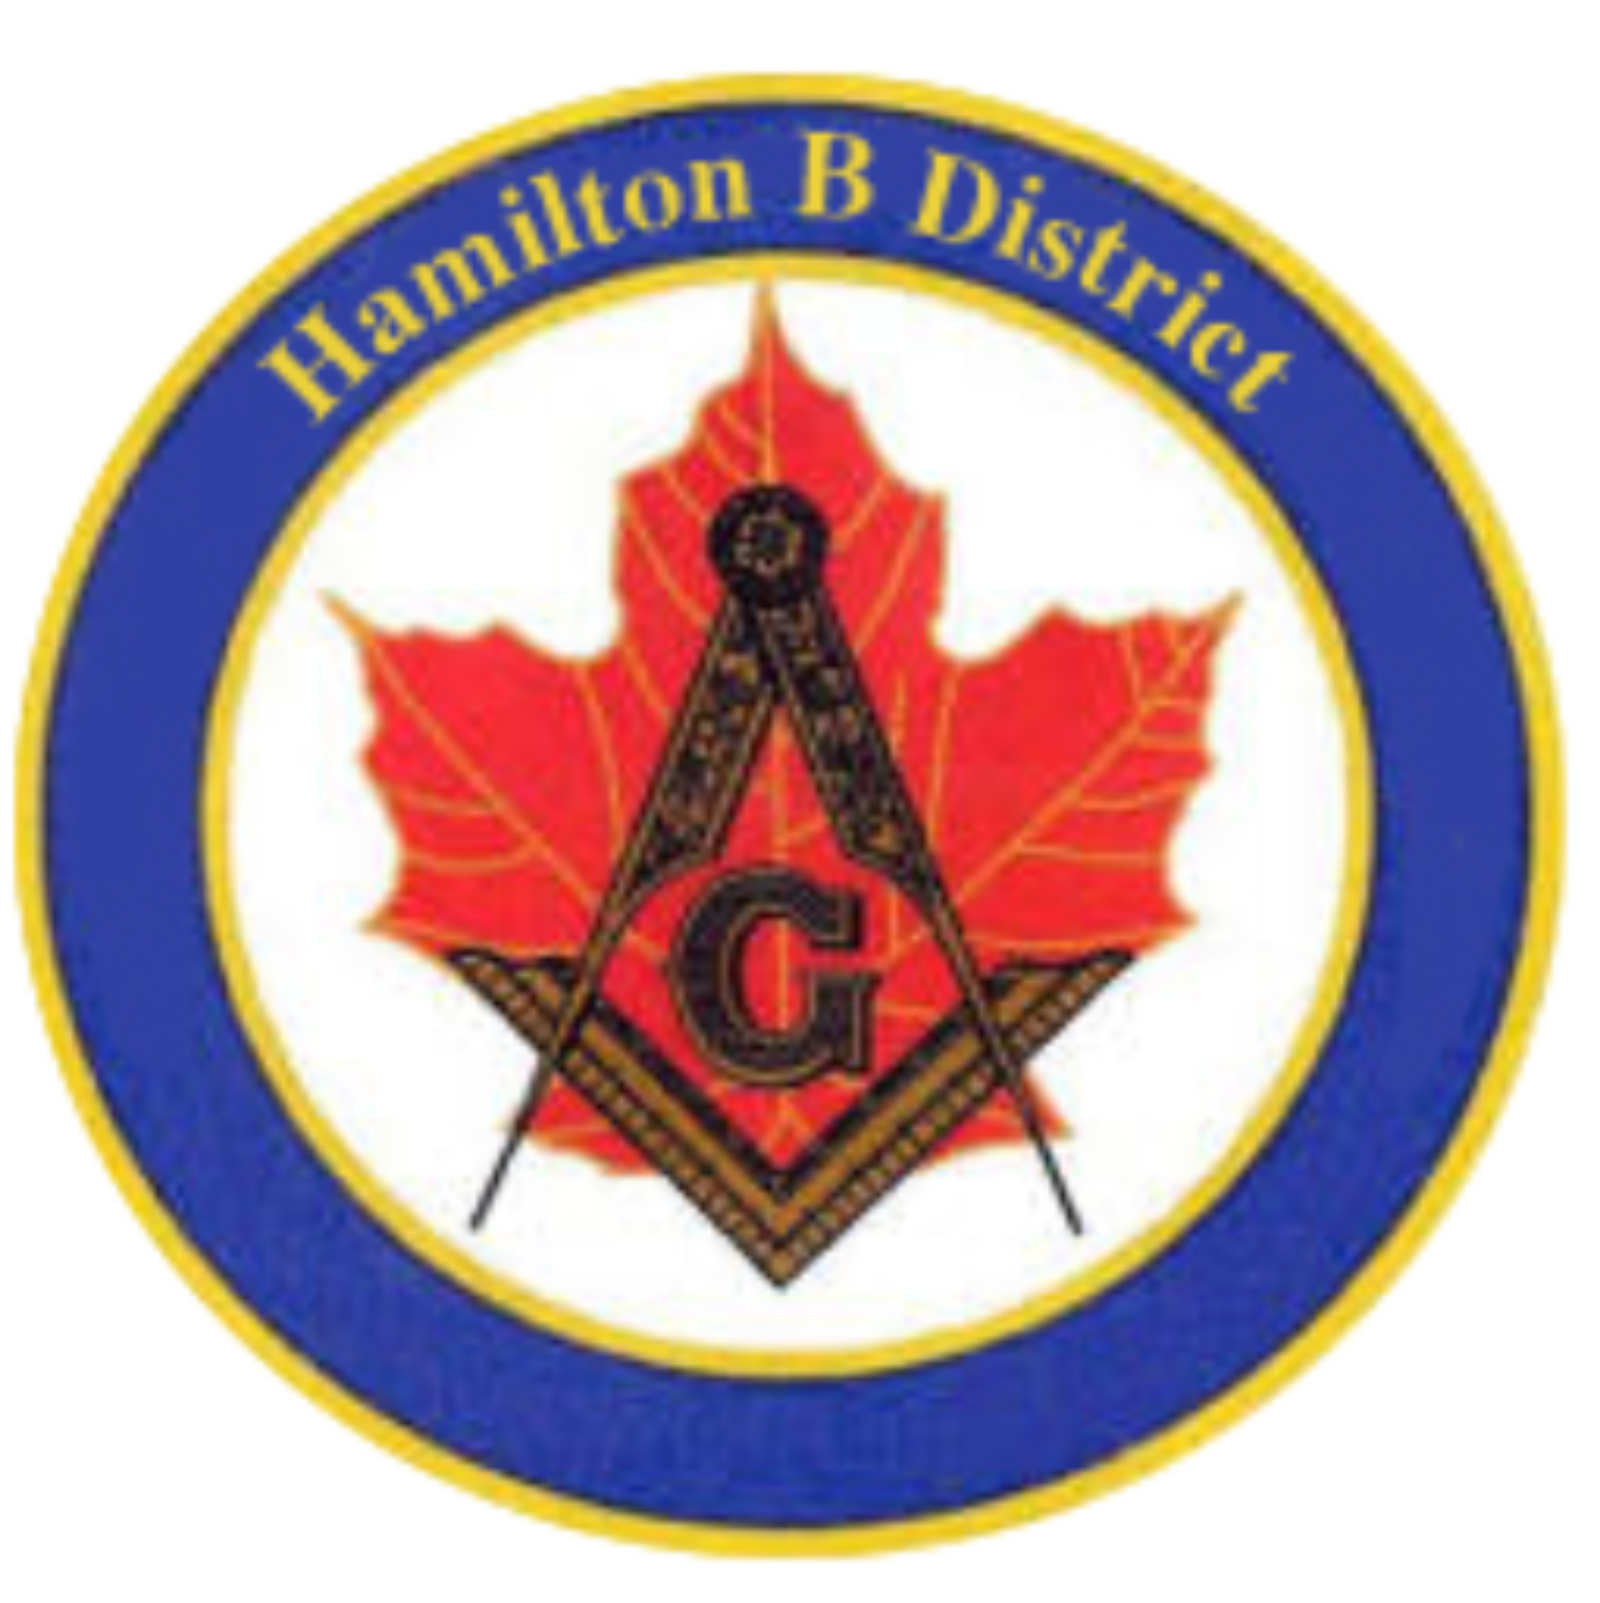 Hamilton B District